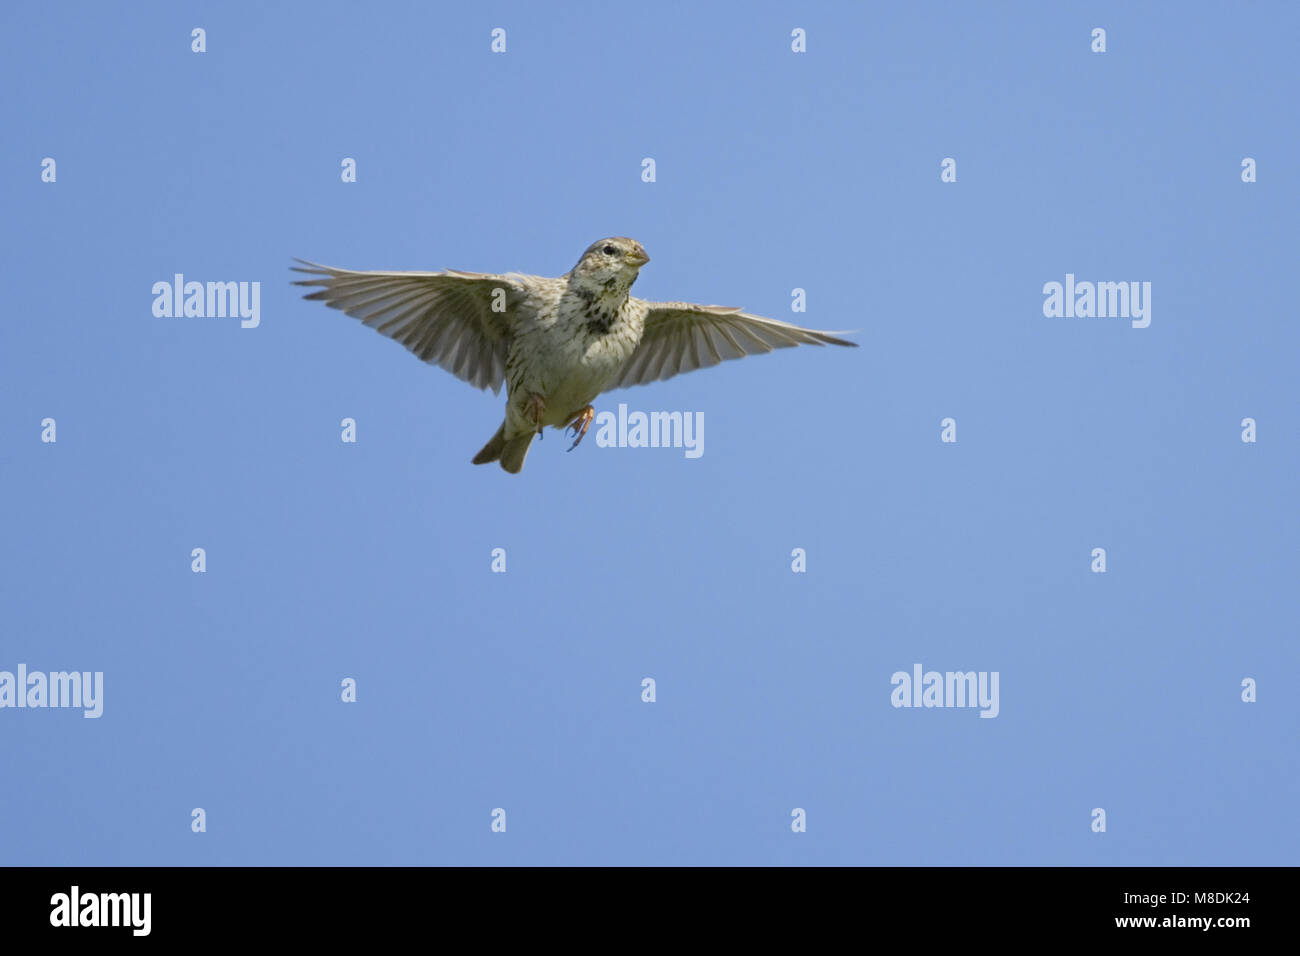 Corn Bunting flying; Grauwe Gors vliegend Stock Photo